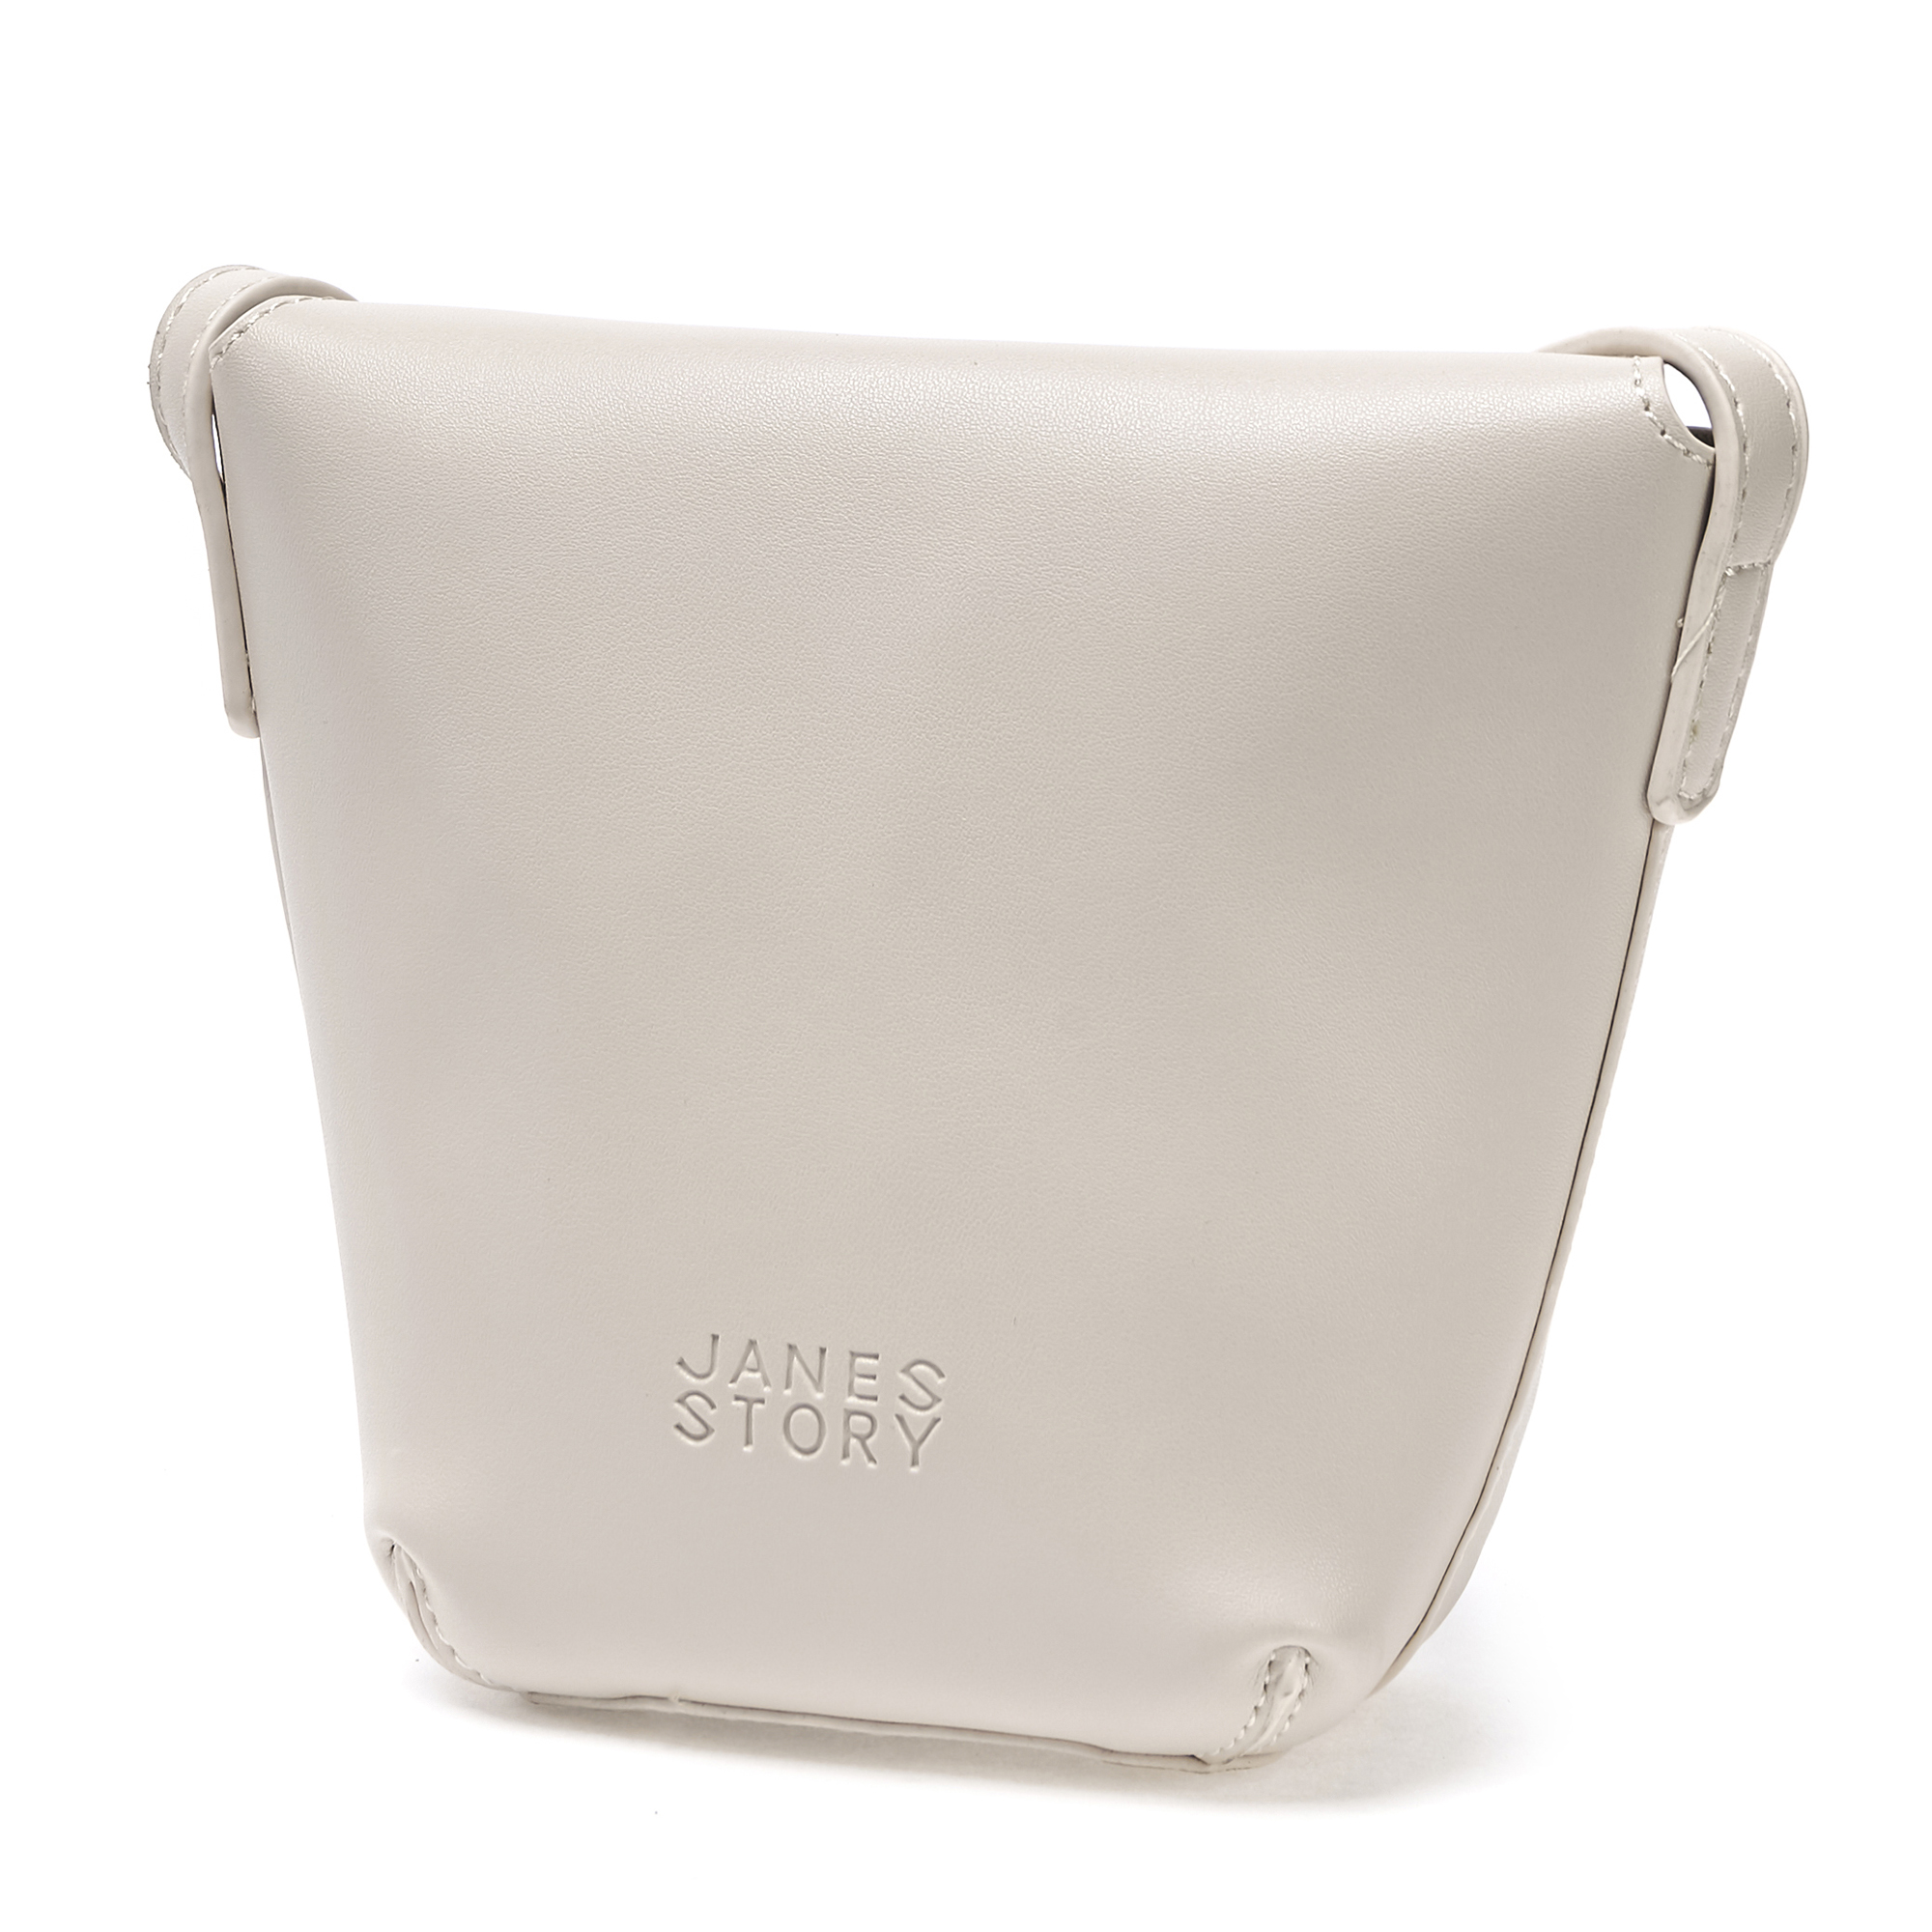 JS-405-1-62 белая сумка женская Jane's Story